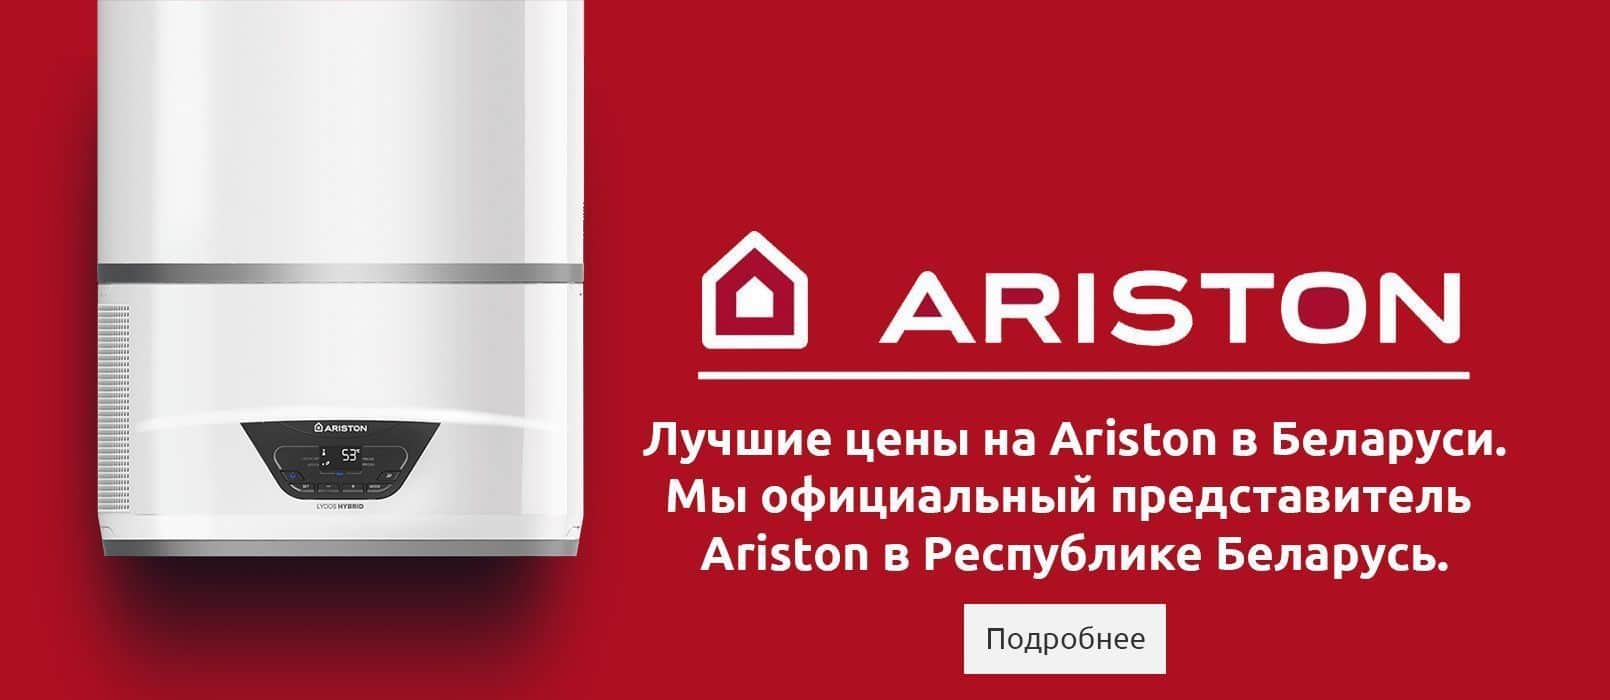 Аристон сервисный ariston help. Ariston водонагреватель reklama banner. Реклама Аристон. Котлы Аристон реклама. Ariston водонагреватели реклама.